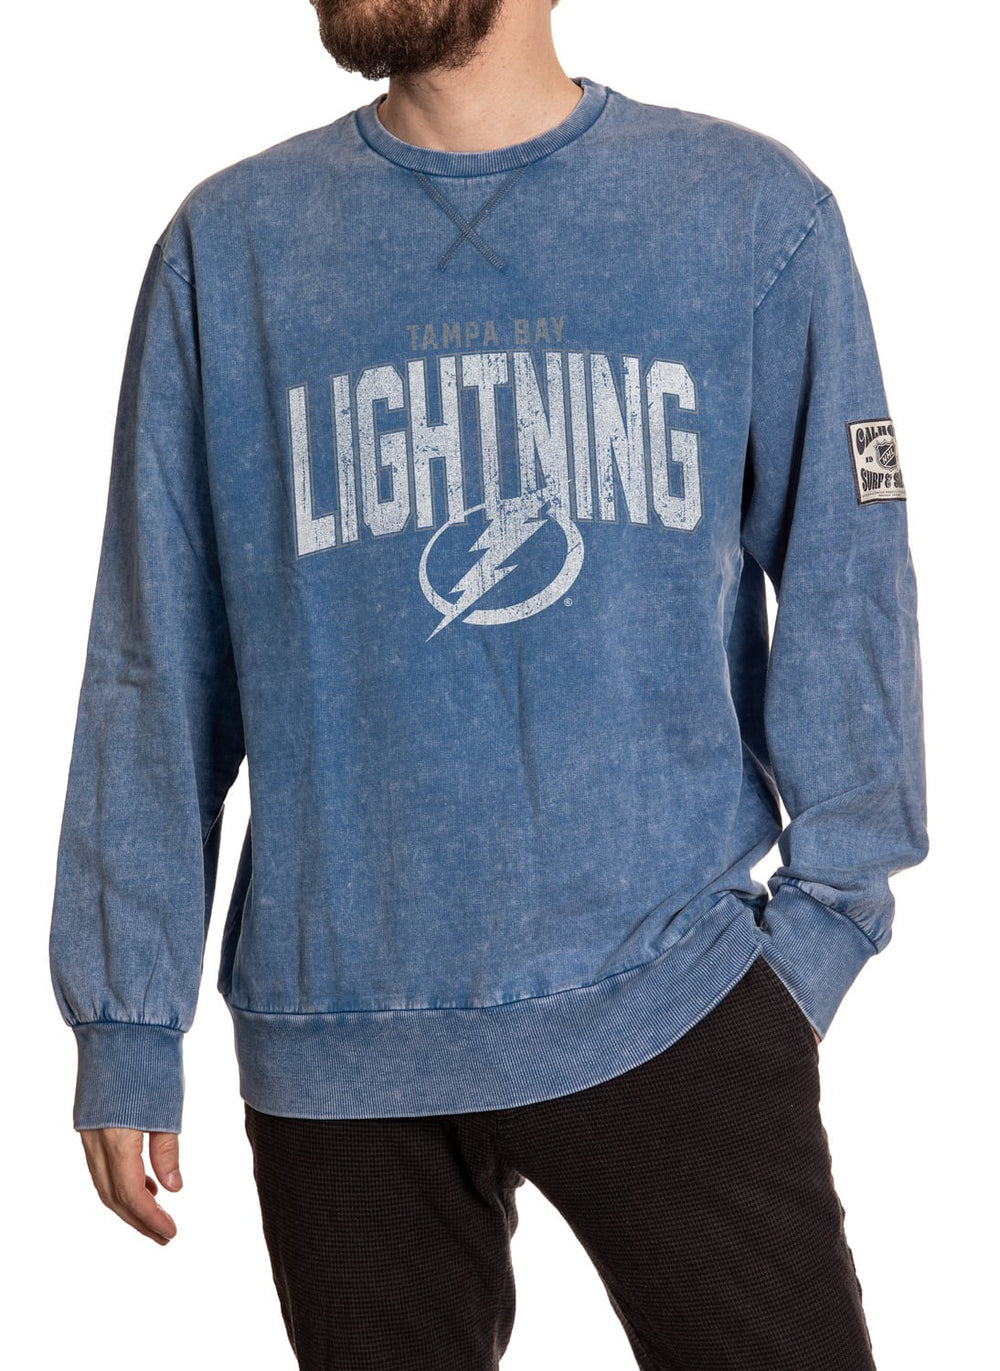 Tampa bay sports tampa bay lightning gasparilla inspired shirt, hoodie,  sweater, long sleeve and tank top